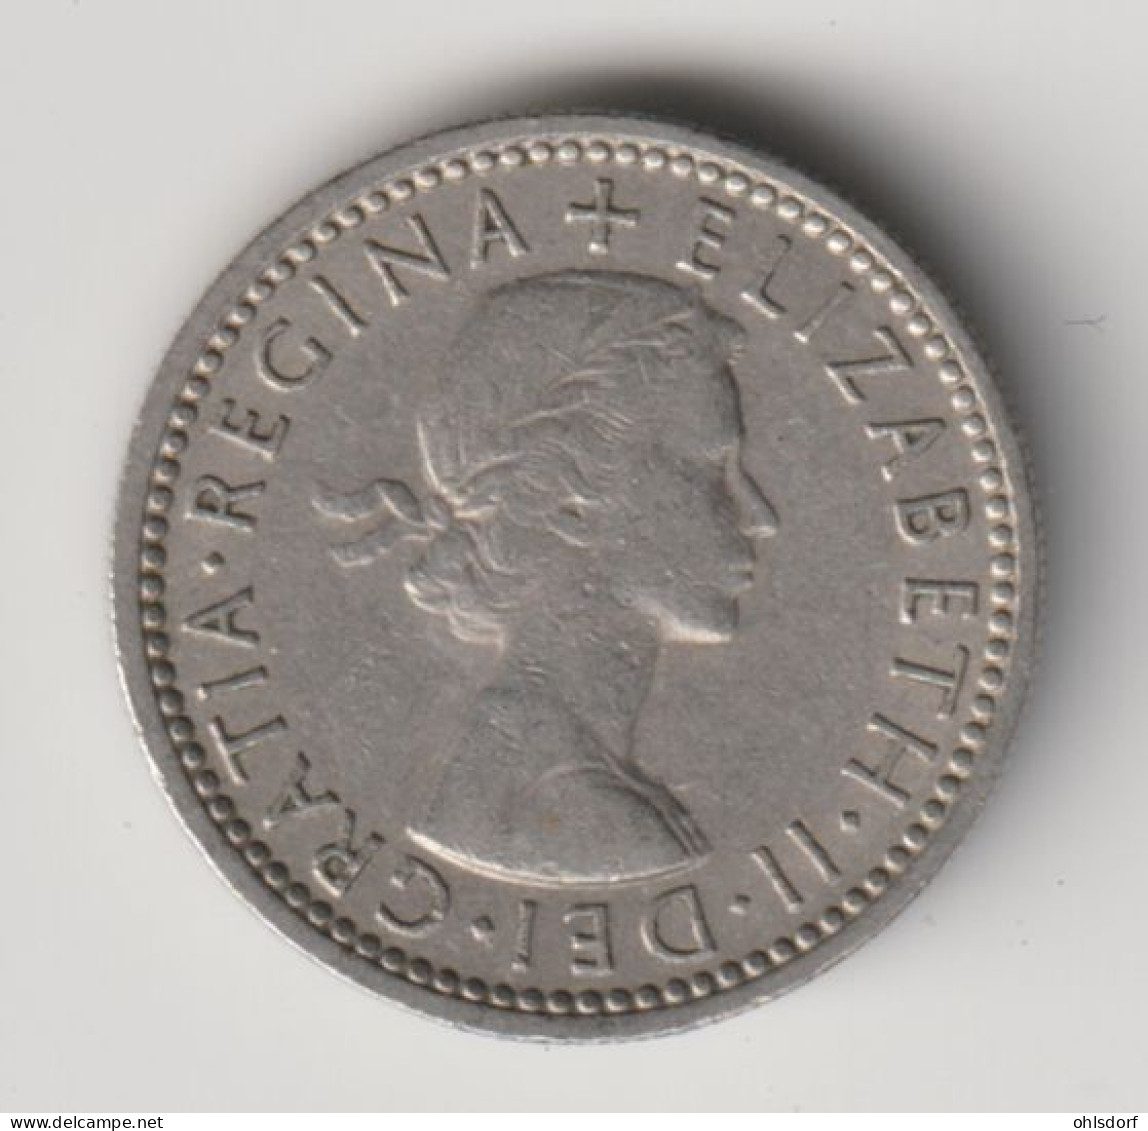 GREAT BRITAIN 1955: 6 Pence, KM 903 - H. 6 Pence